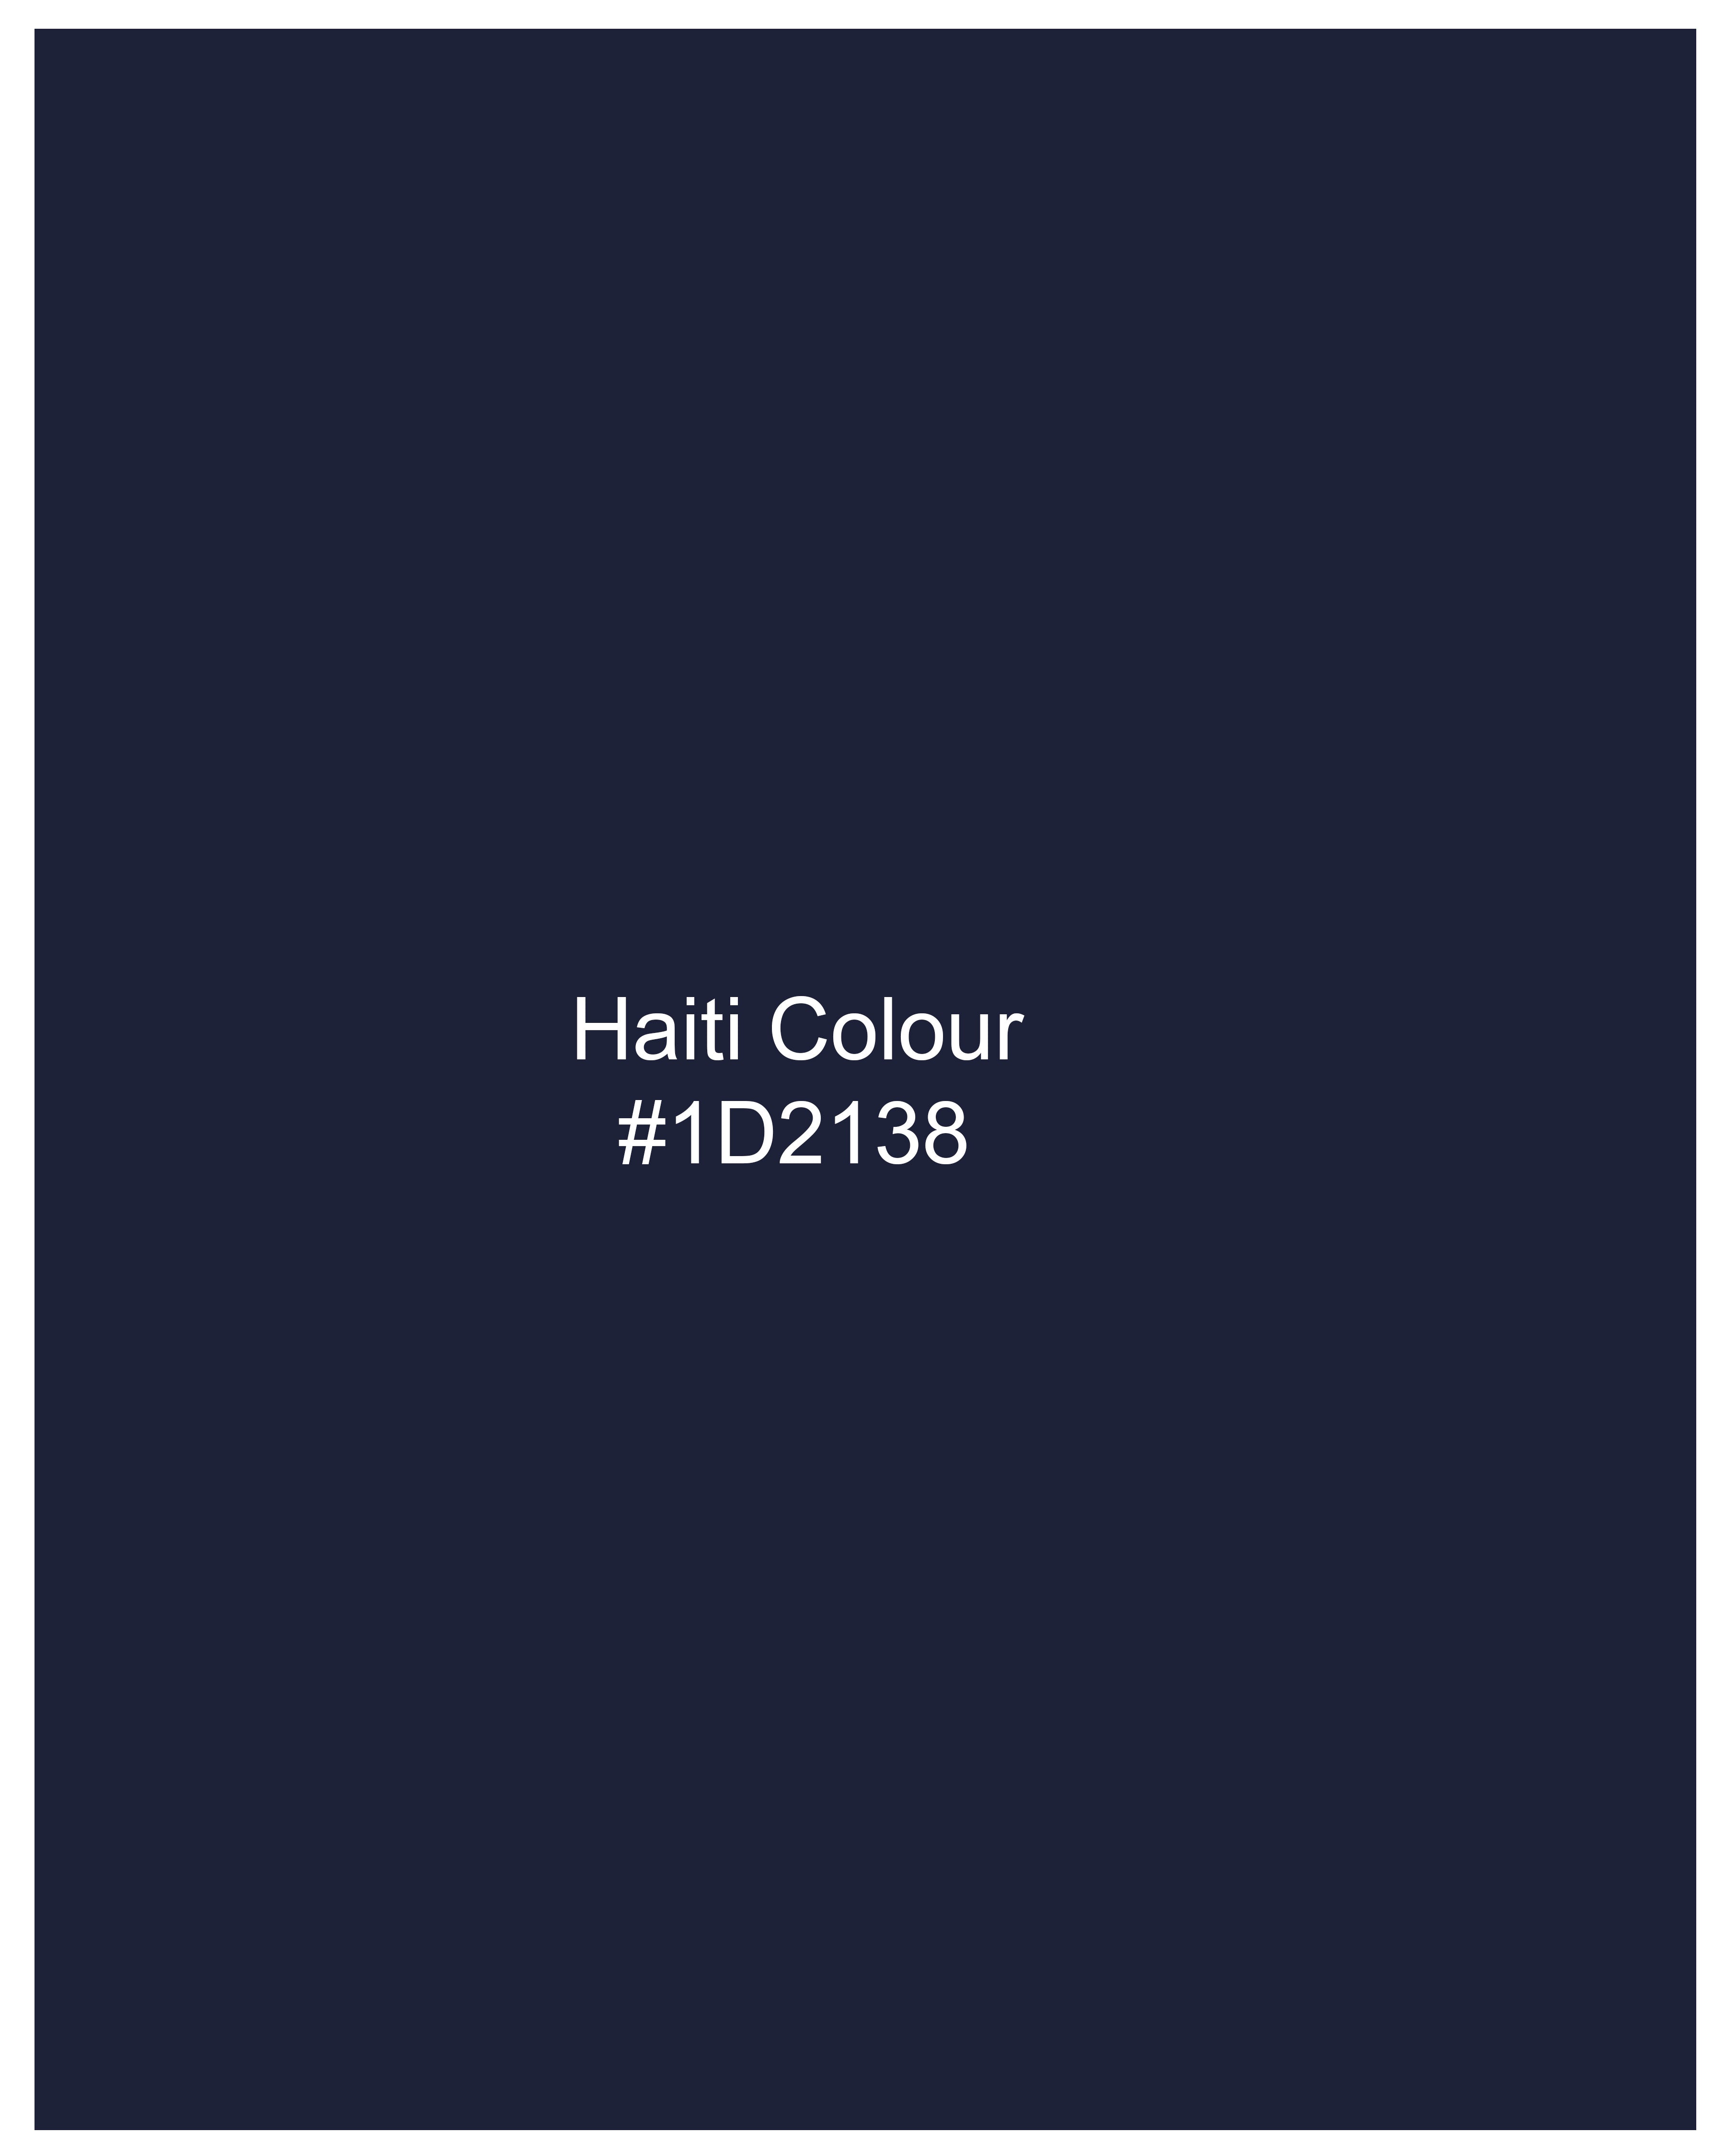 Haiti Navy Blue Dobby Textured Premium Giza Cotton Shirt 9396-M-38, 9396-M-H-38, 9396-M-39, 9396-M-H-39, 9396-M-40, 9396-M-H-40, 9396-M-42, 9396-M-H-42, 9396-M-44, 9396-M-H-44, 9396-M-46, 9396-M-H-46, 9396-M-48, 9396-M-H-48, 9396-M-50, 9396-M-H-50, 9396-M-52, 9396-M-H-52